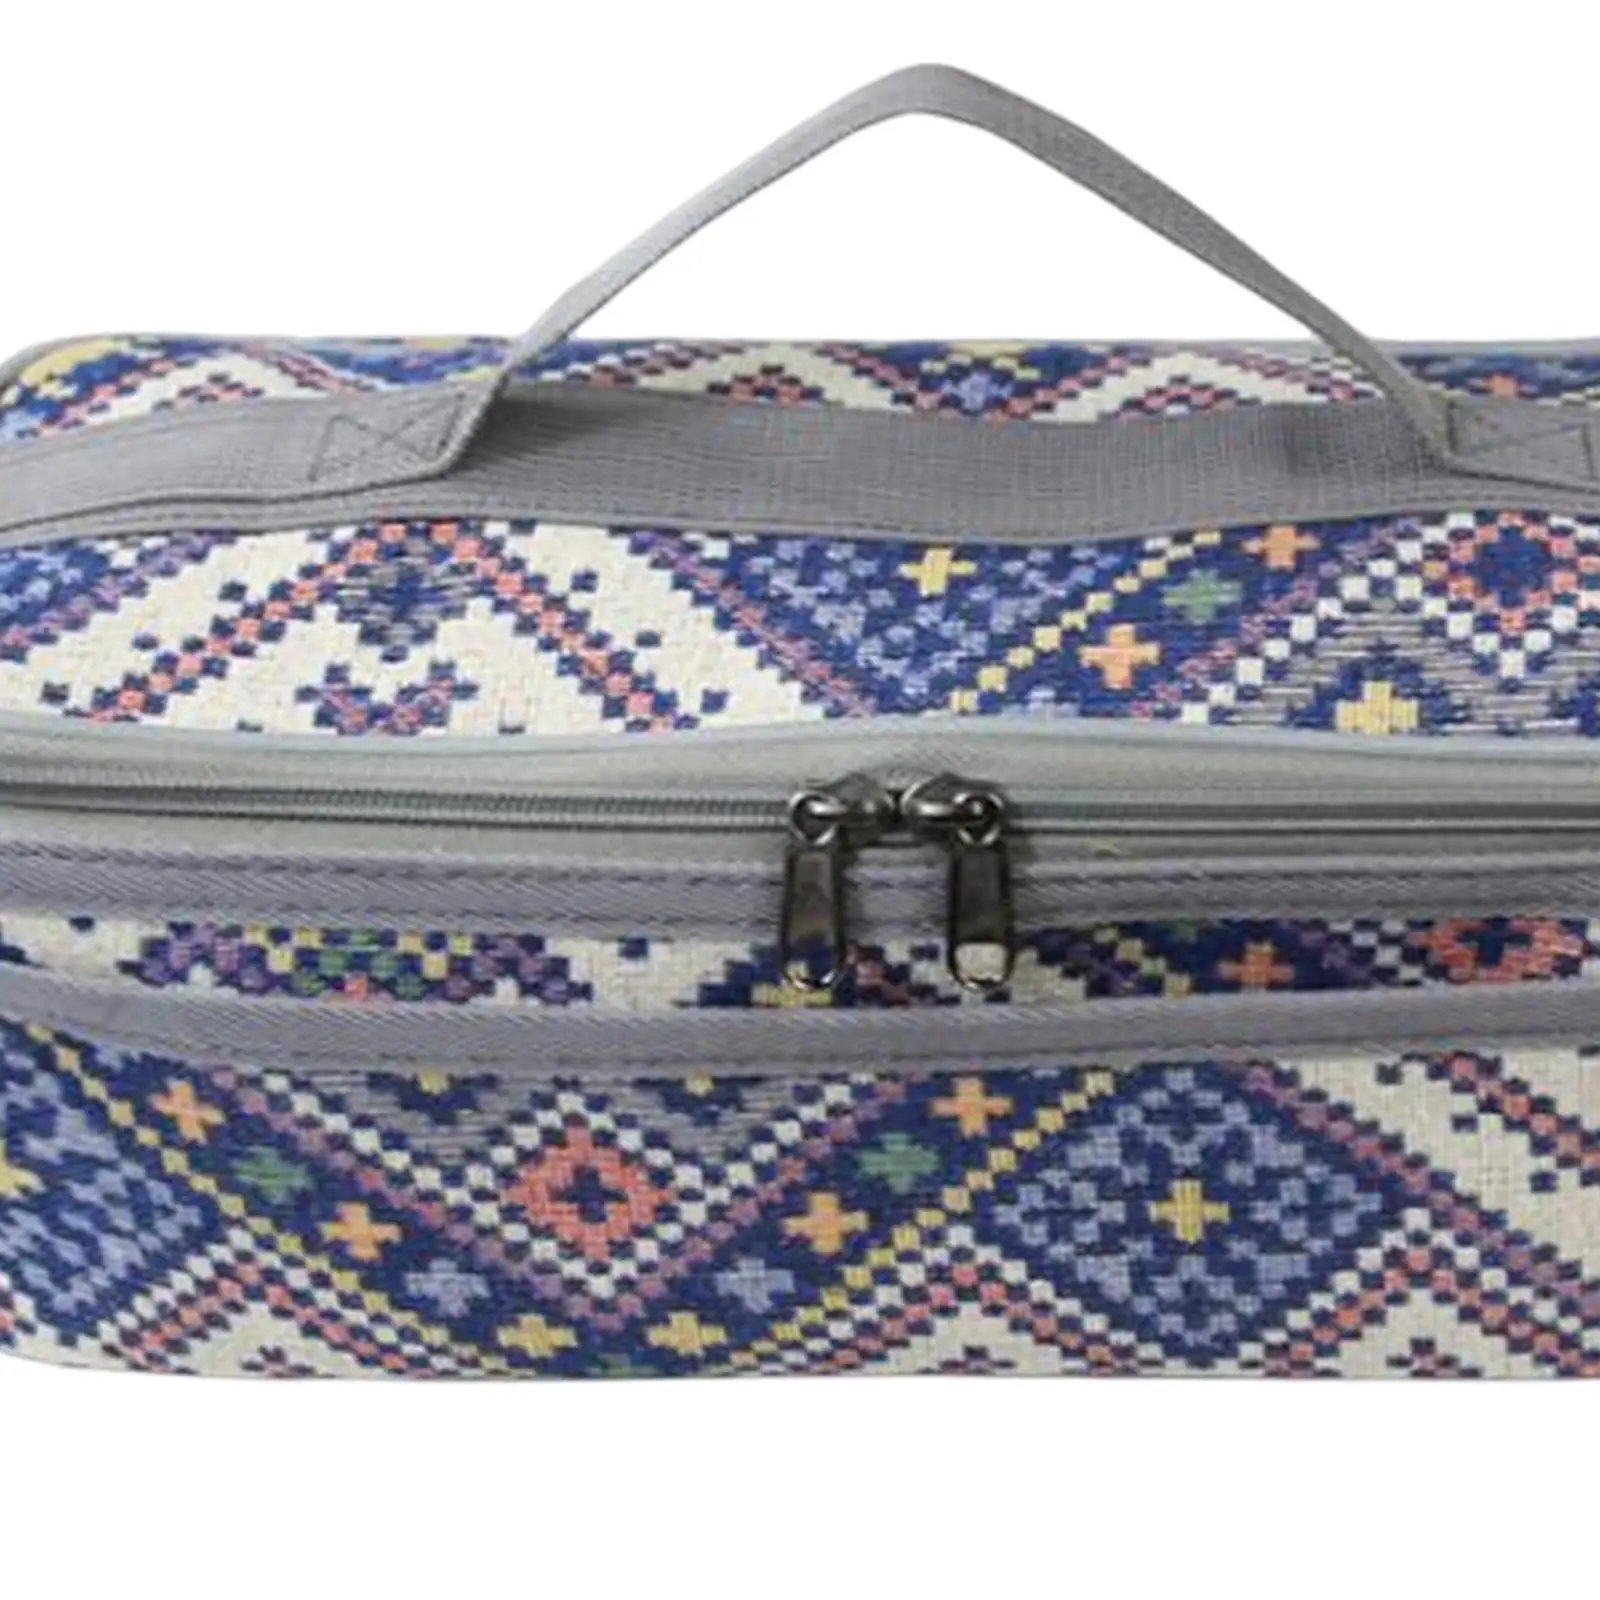 Tableware Storage Bag Organizer Carrier Accessories Tote Utensil Case Travel Bag